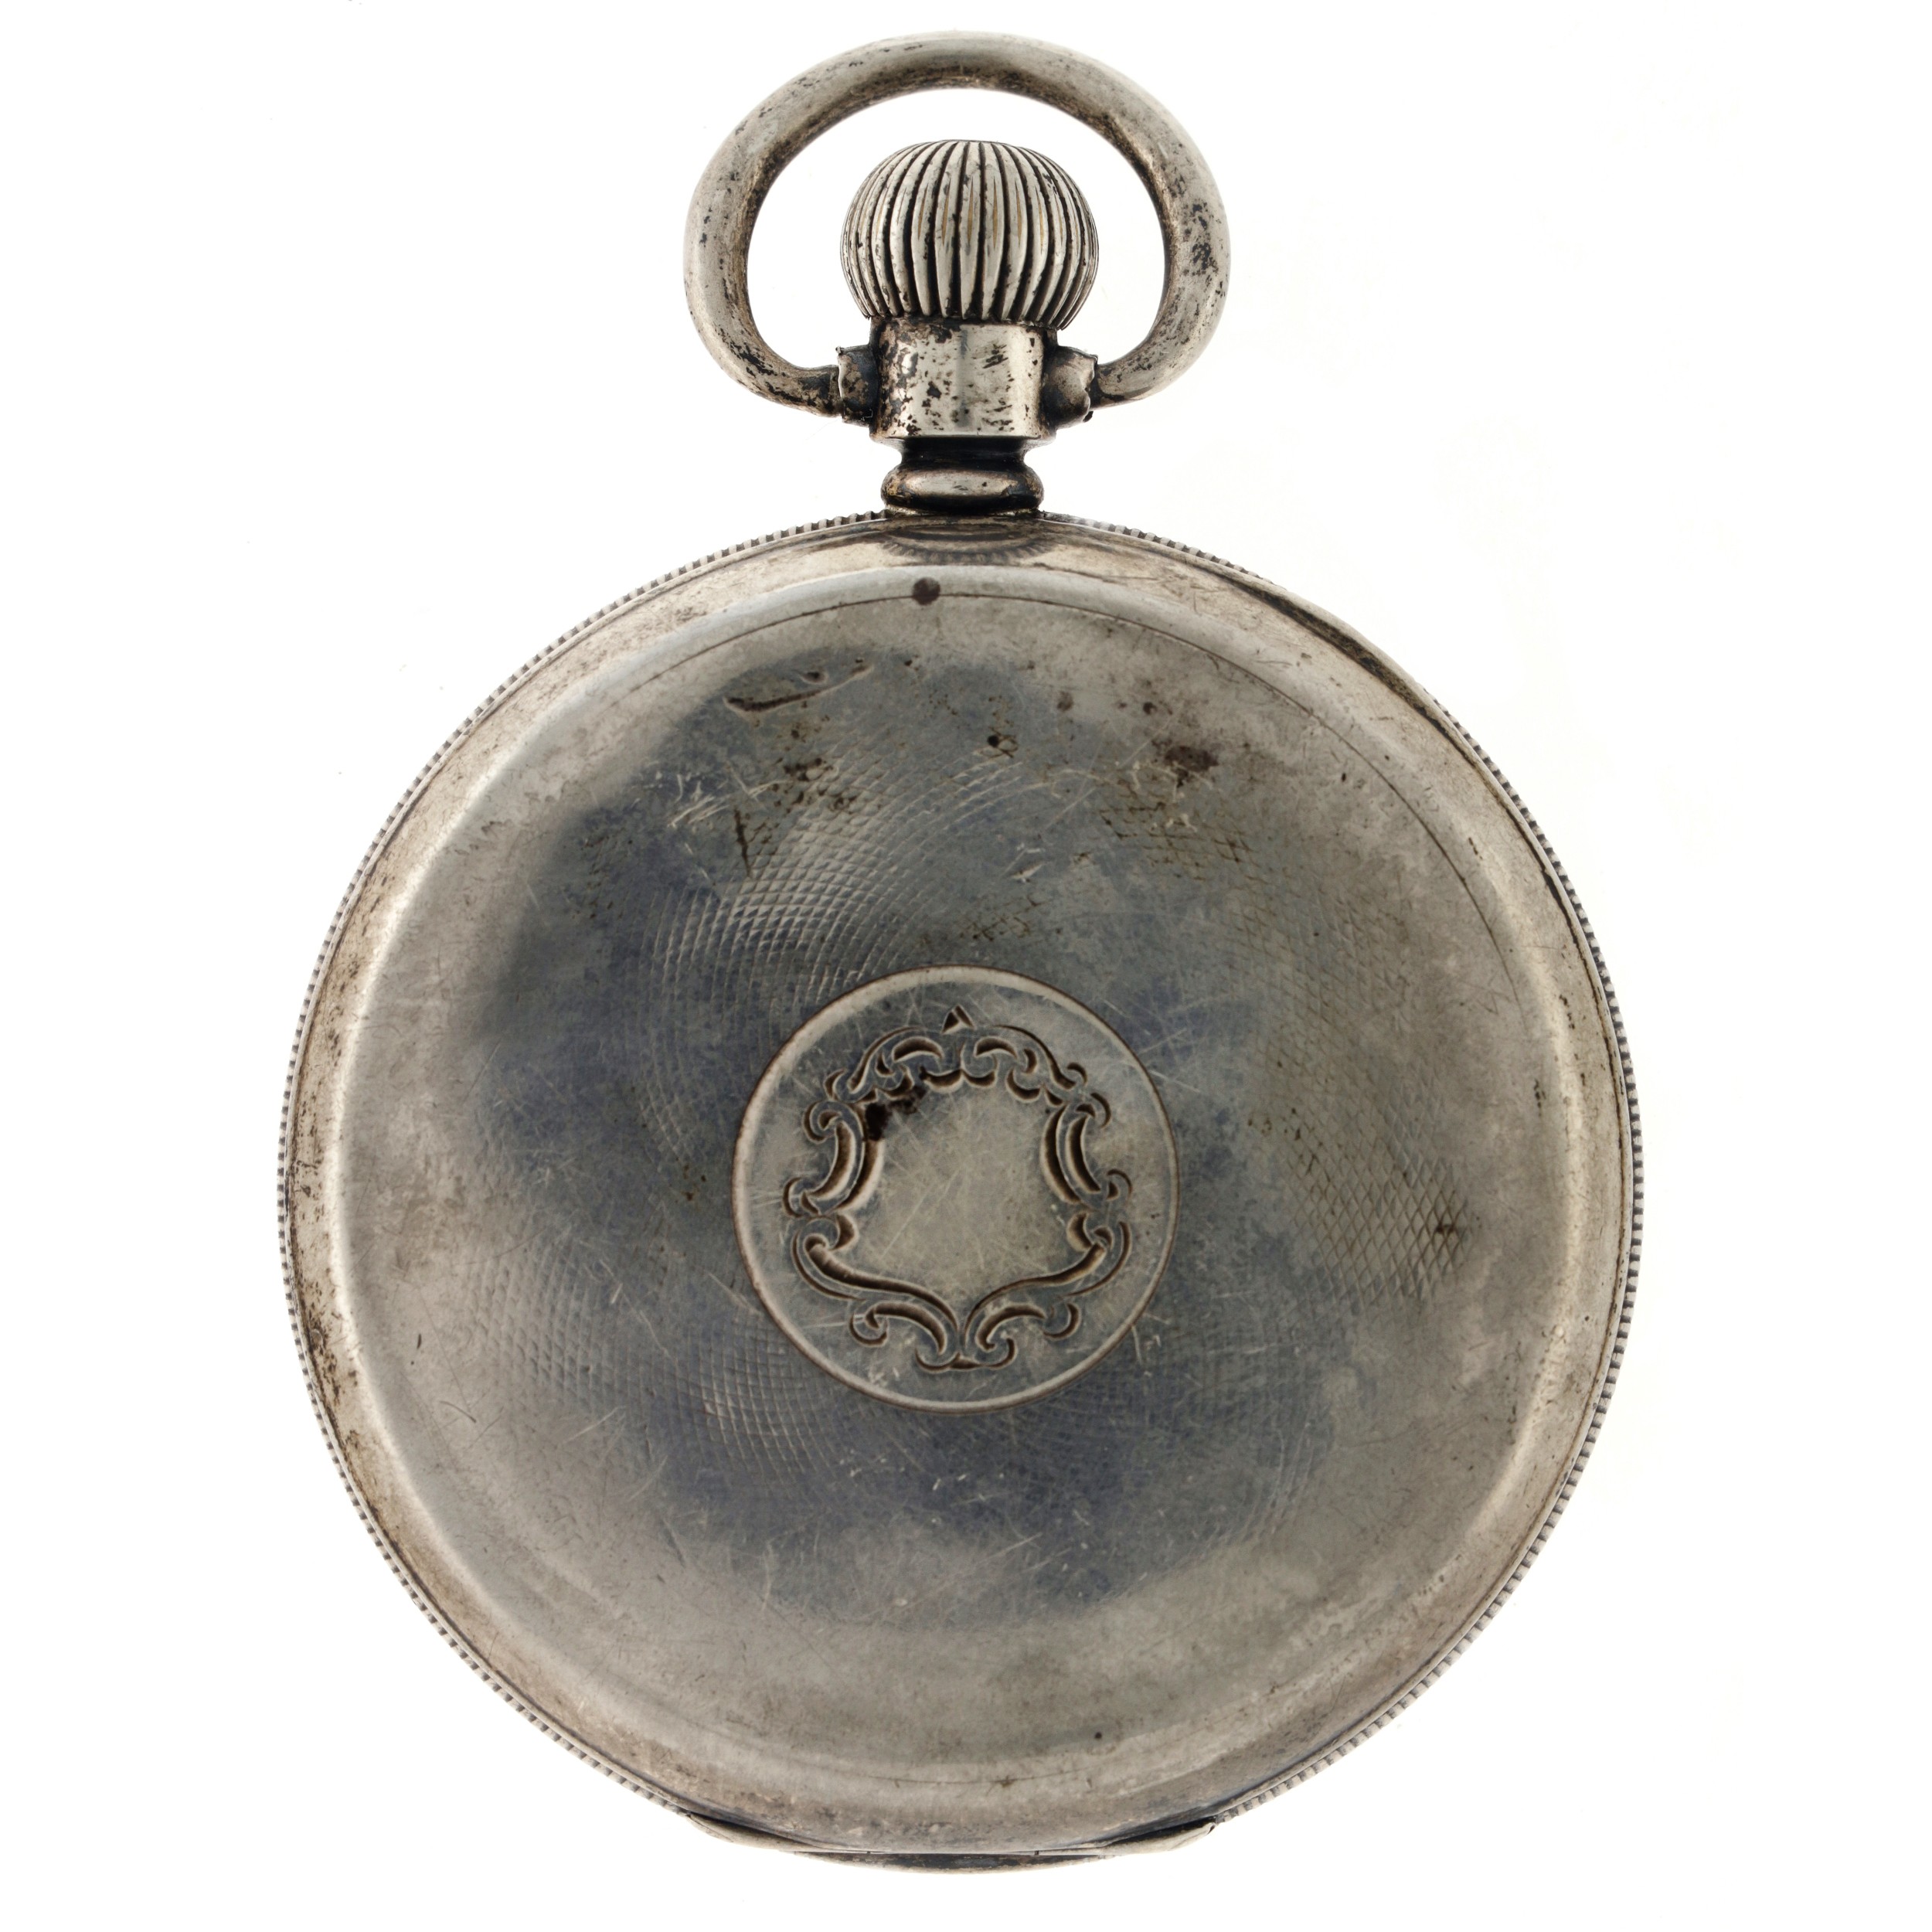 No Reserve - Waltham U.S.A. silver pocketwatch (925/1000) - Men's pocketwatch - approx. 1918. - Image 2 of 7